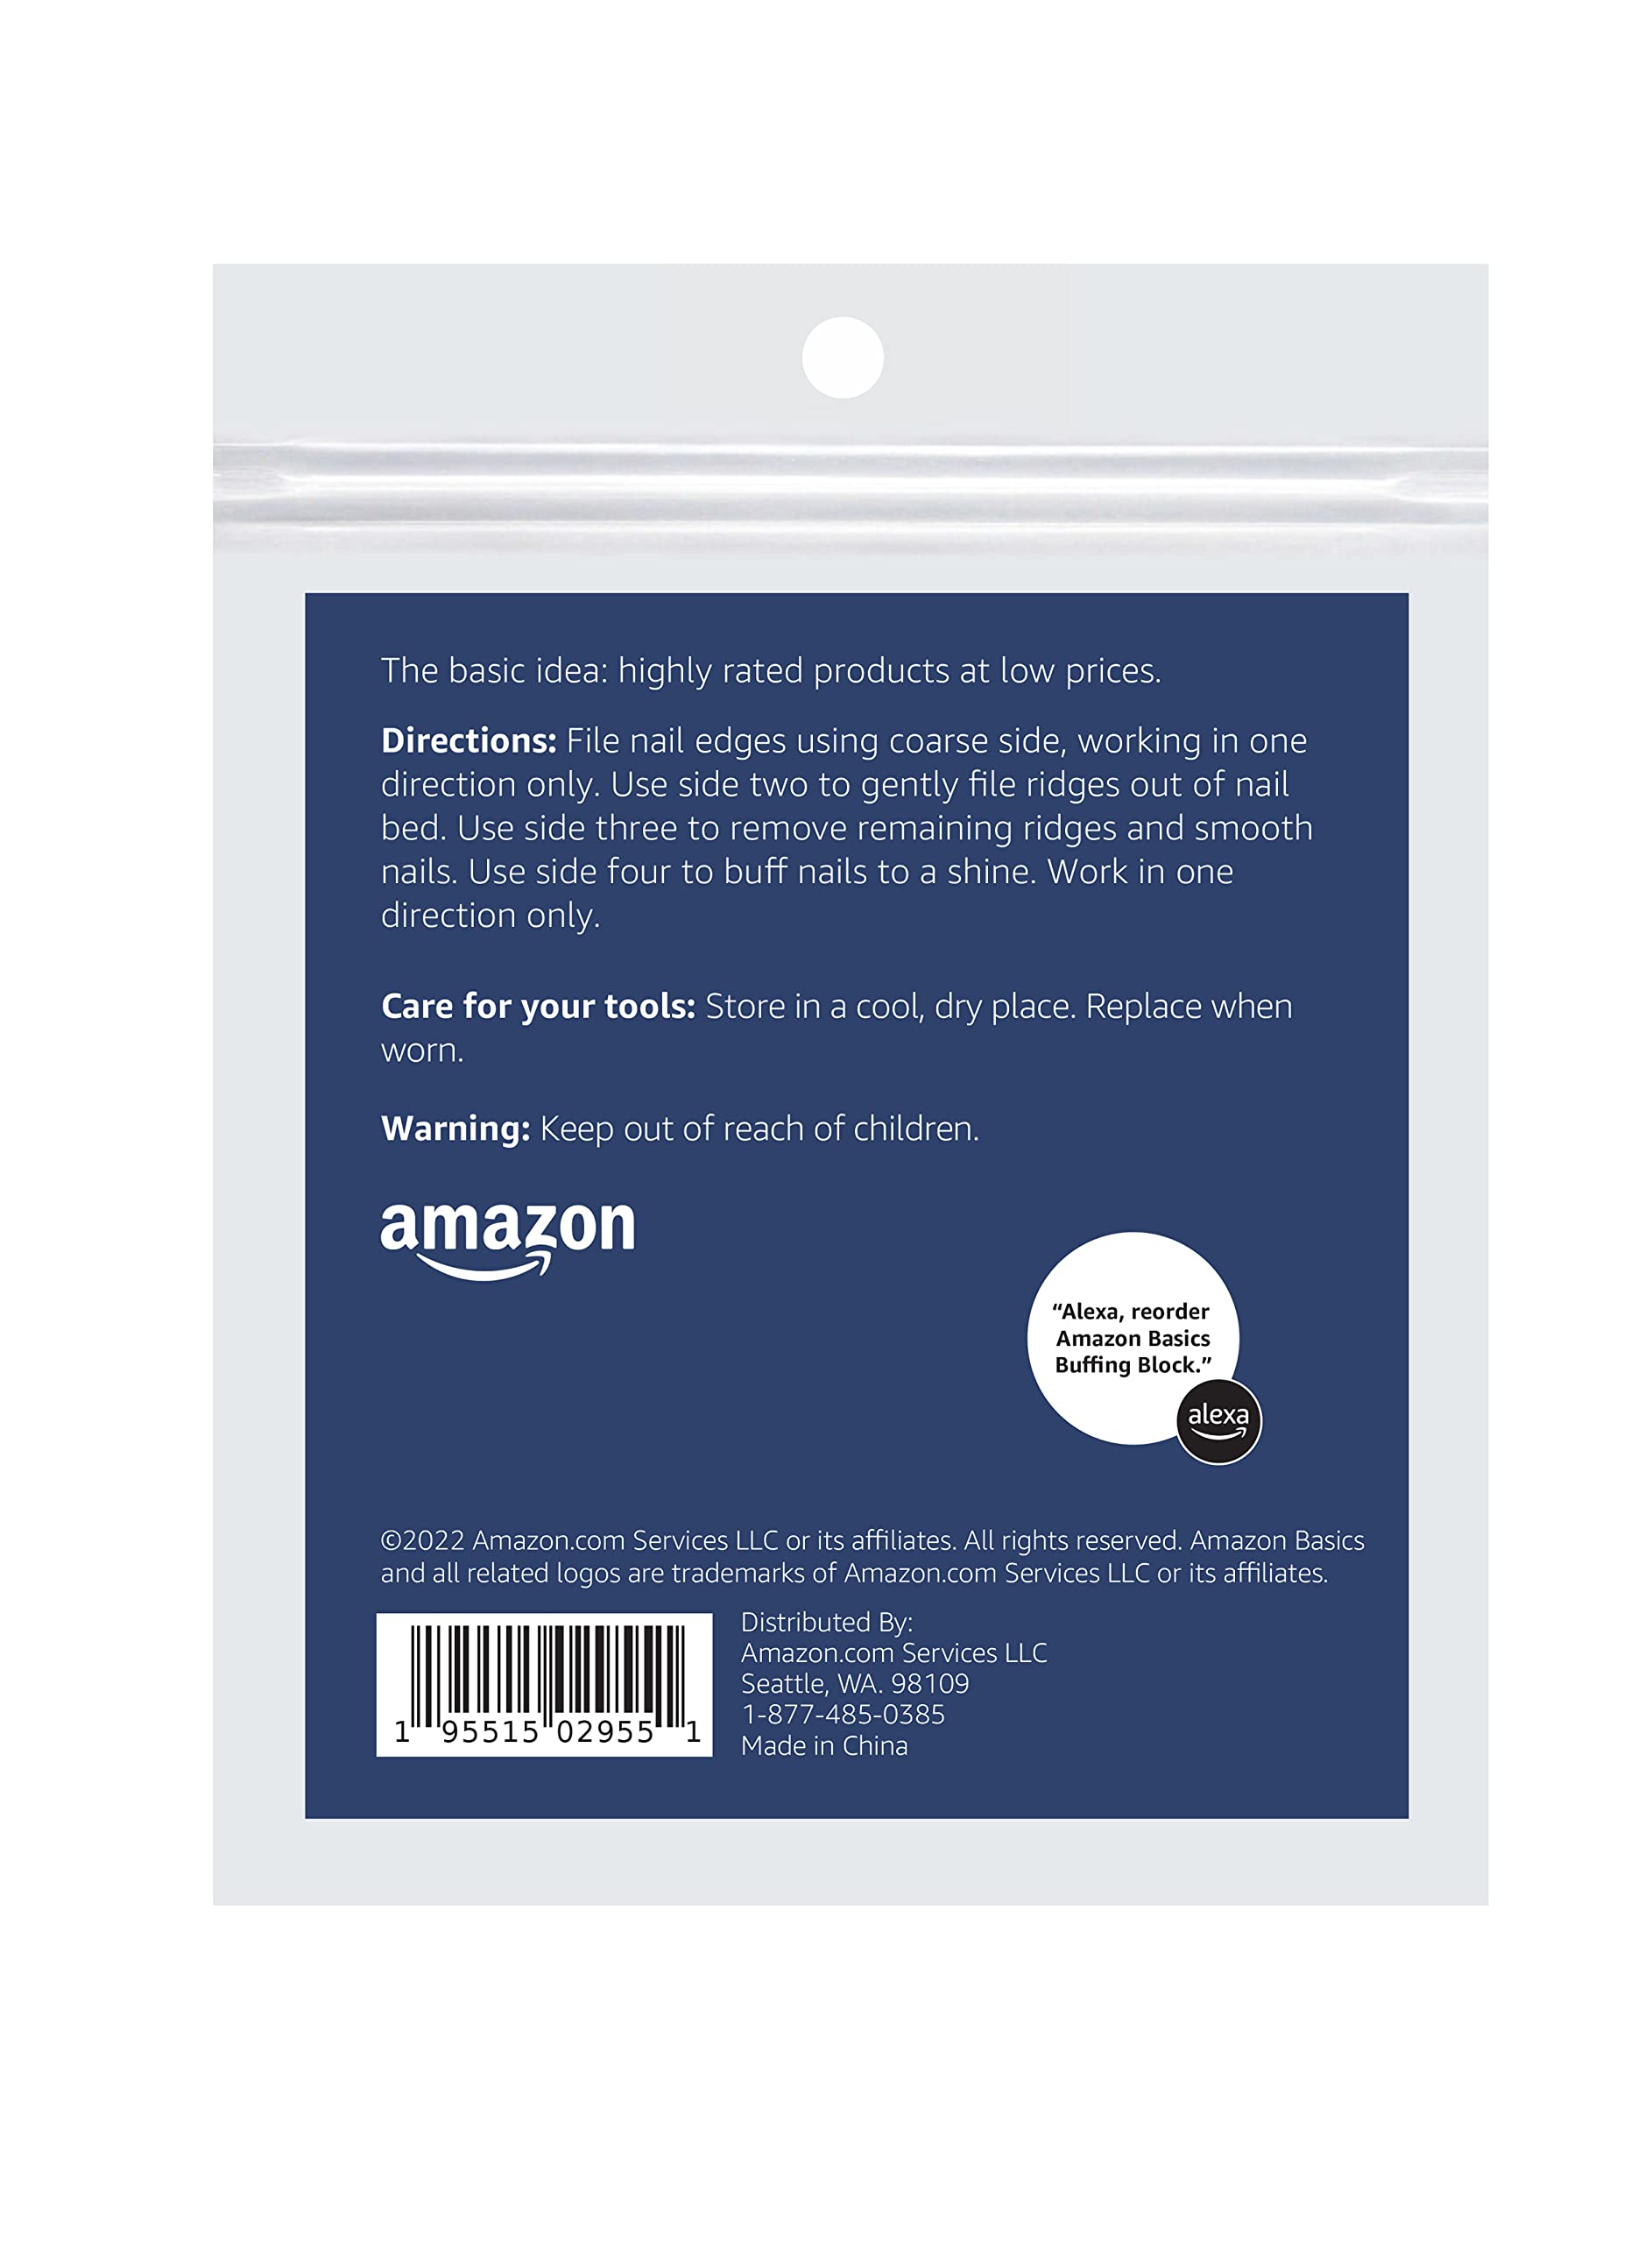 Amazon Basics 4-way Buffing Block 3-Pack